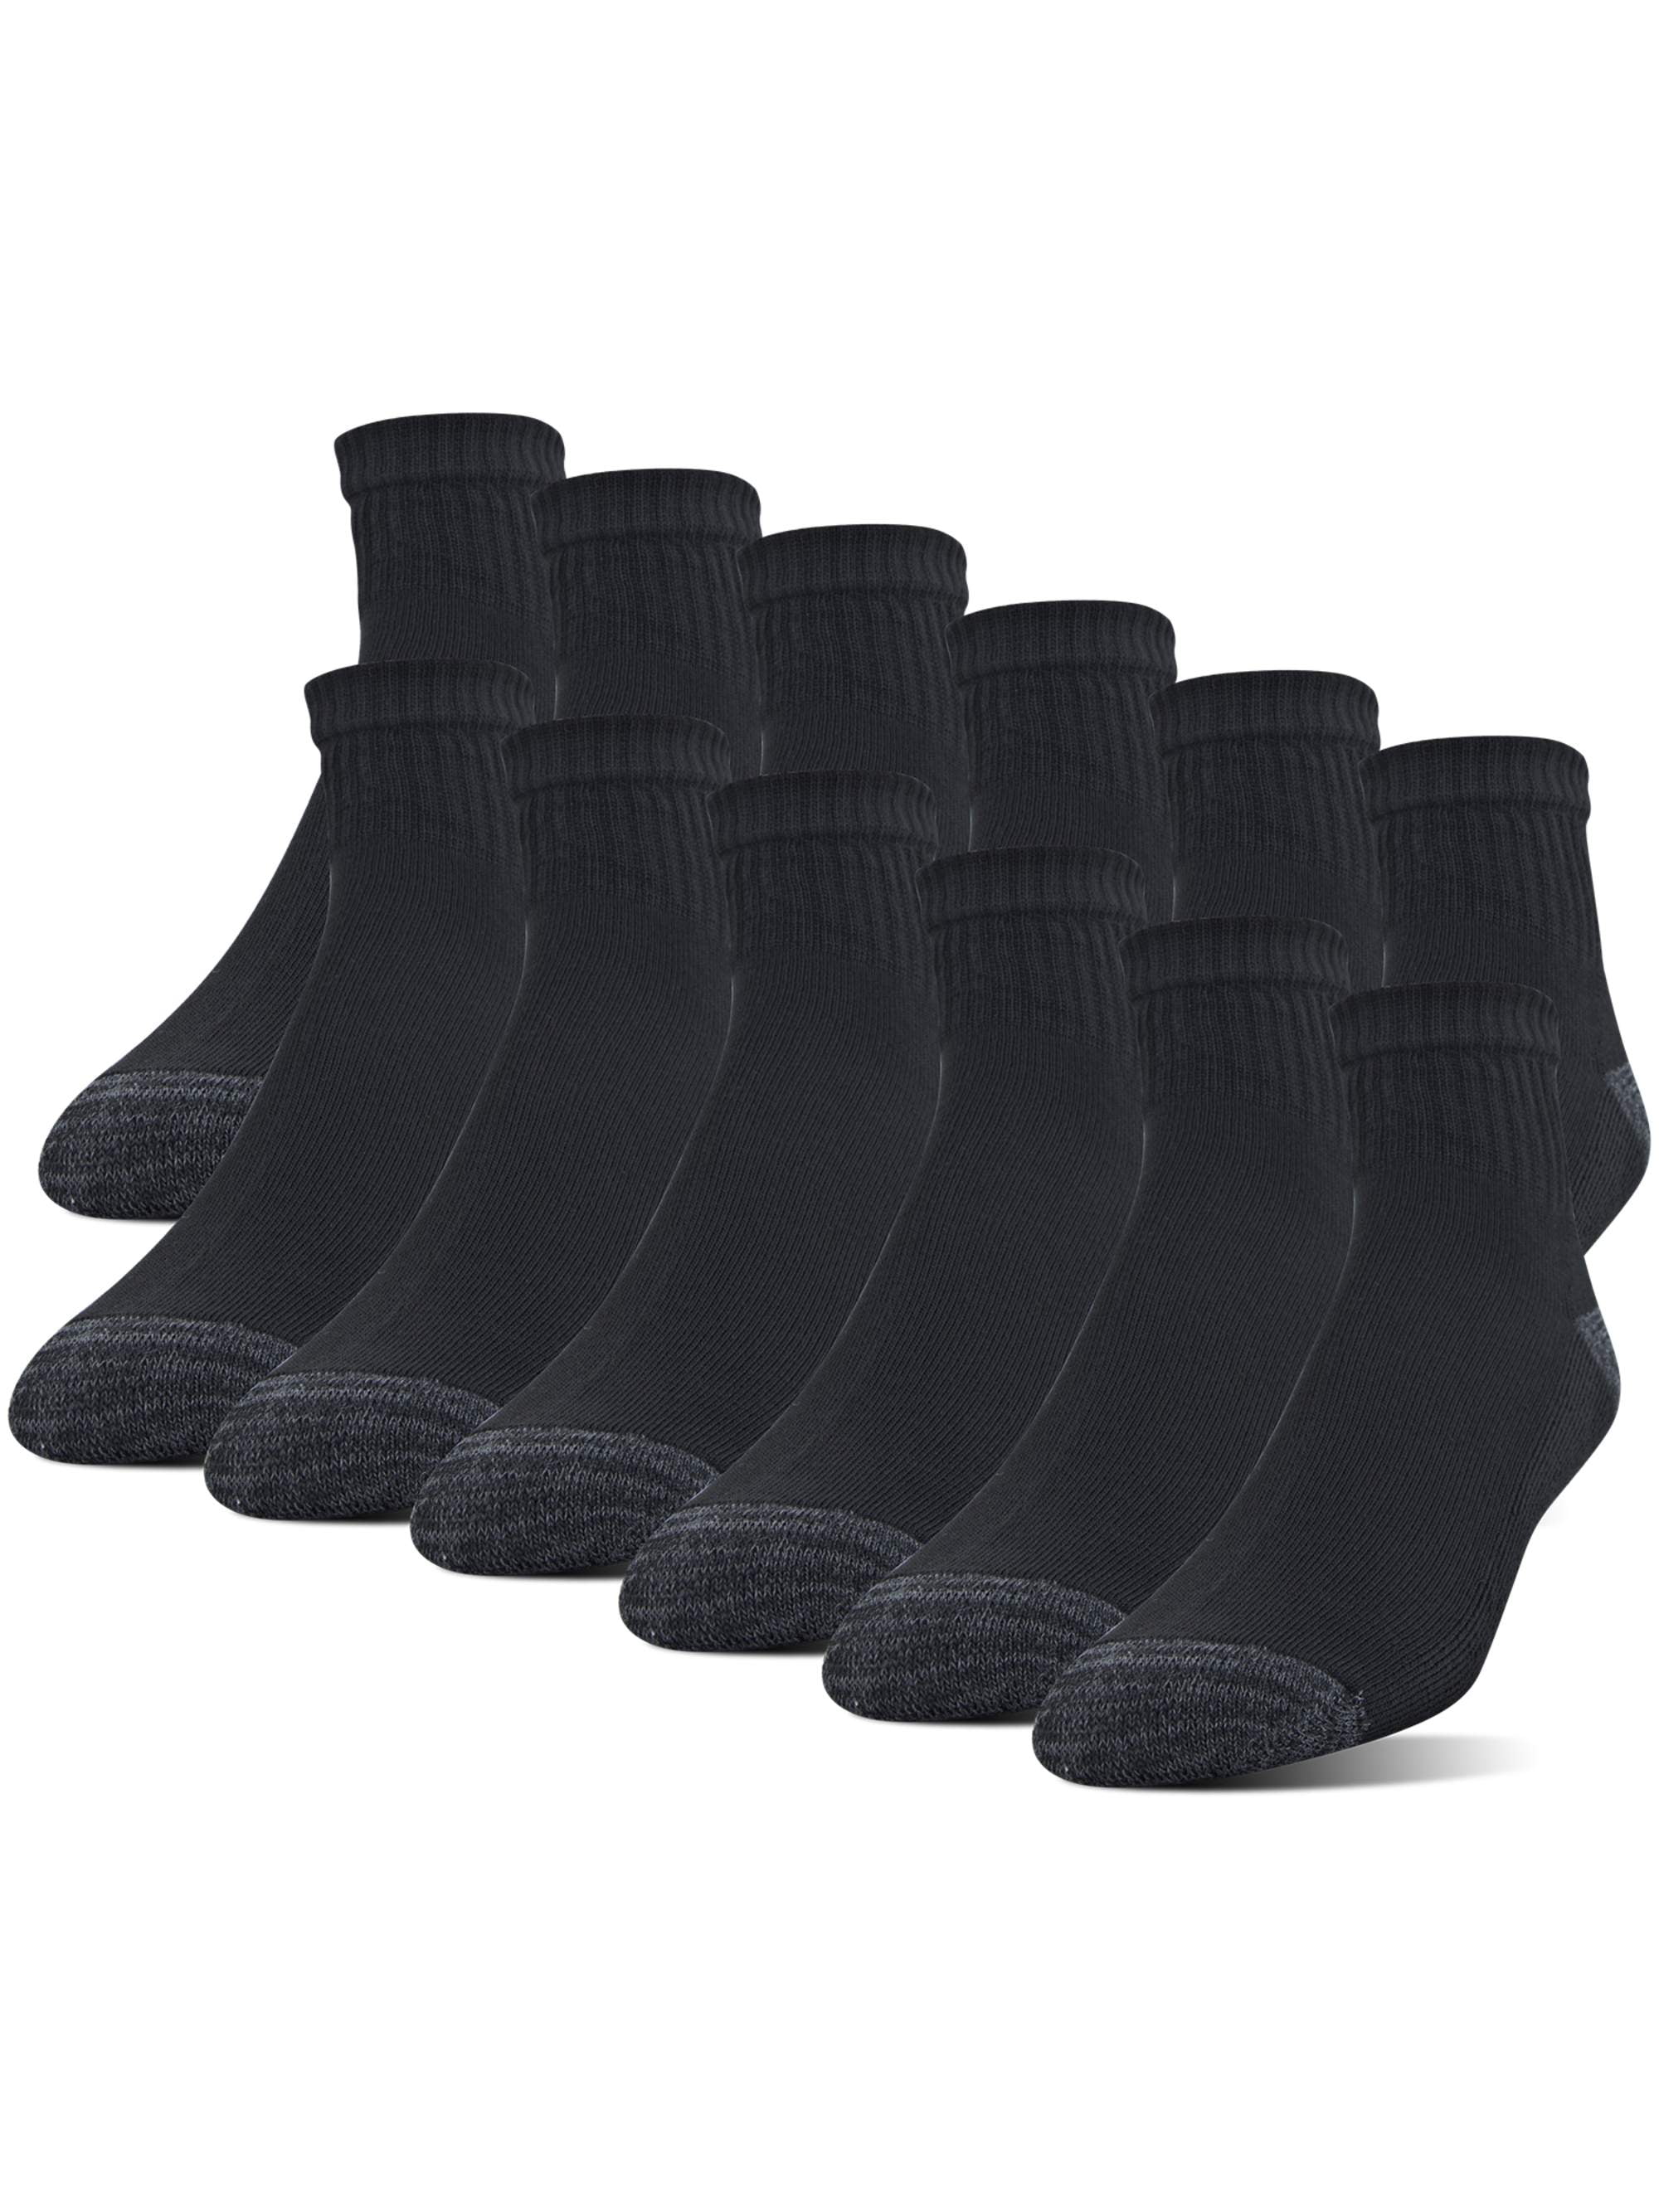 GILDAN womens Flat Knit Ankle Socks 10 Pairs Socks